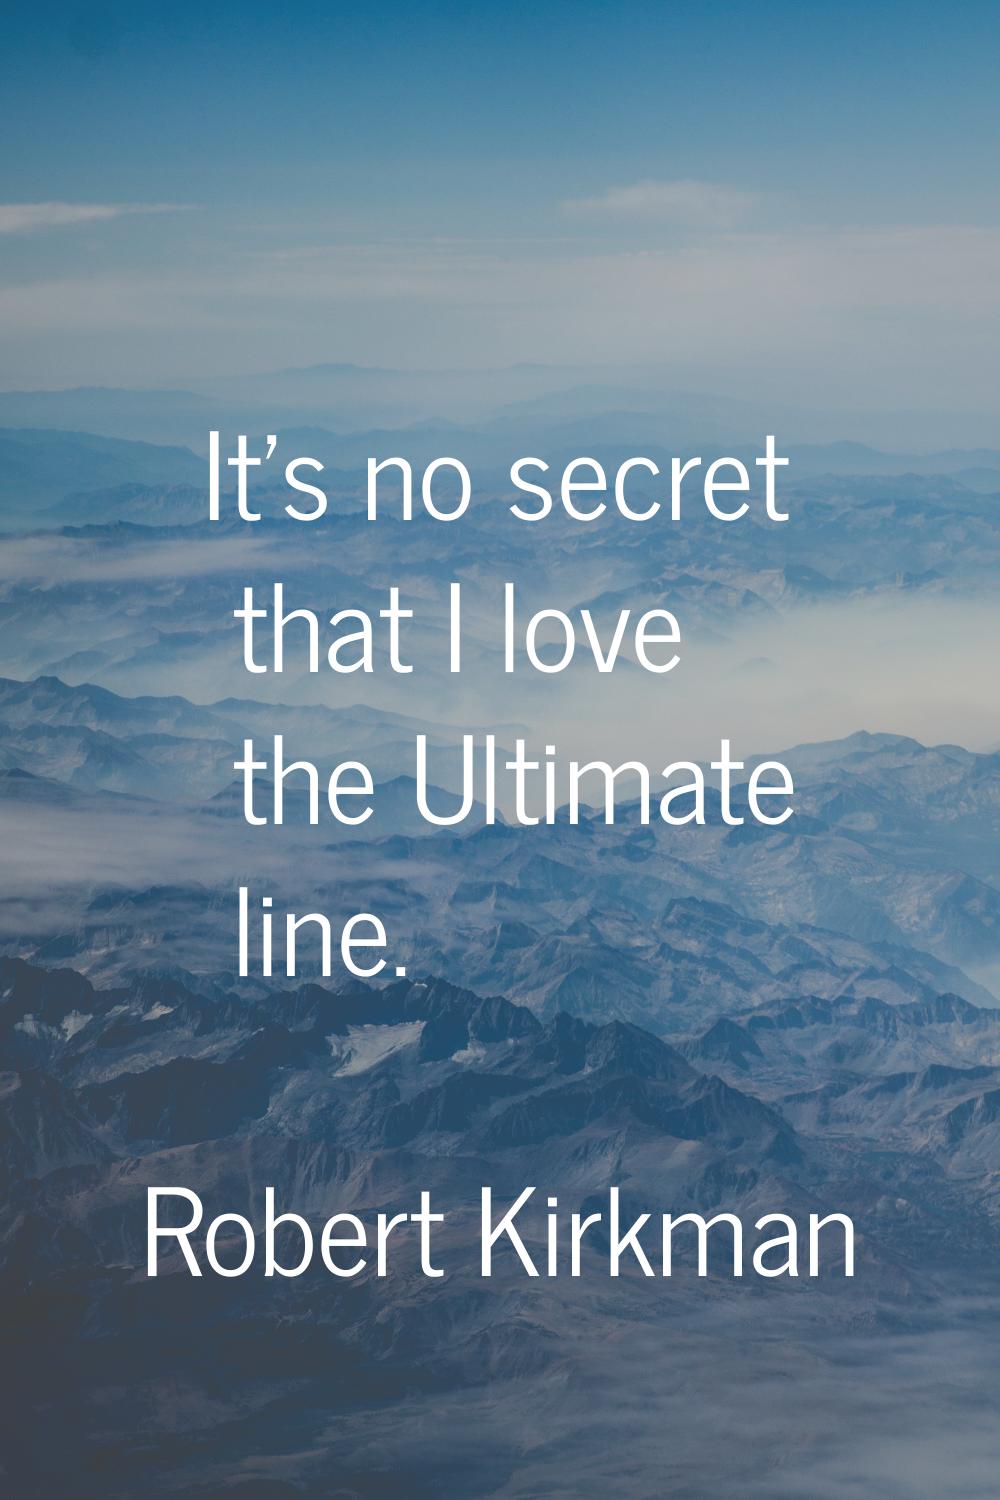 It's no secret that I love the Ultimate line.